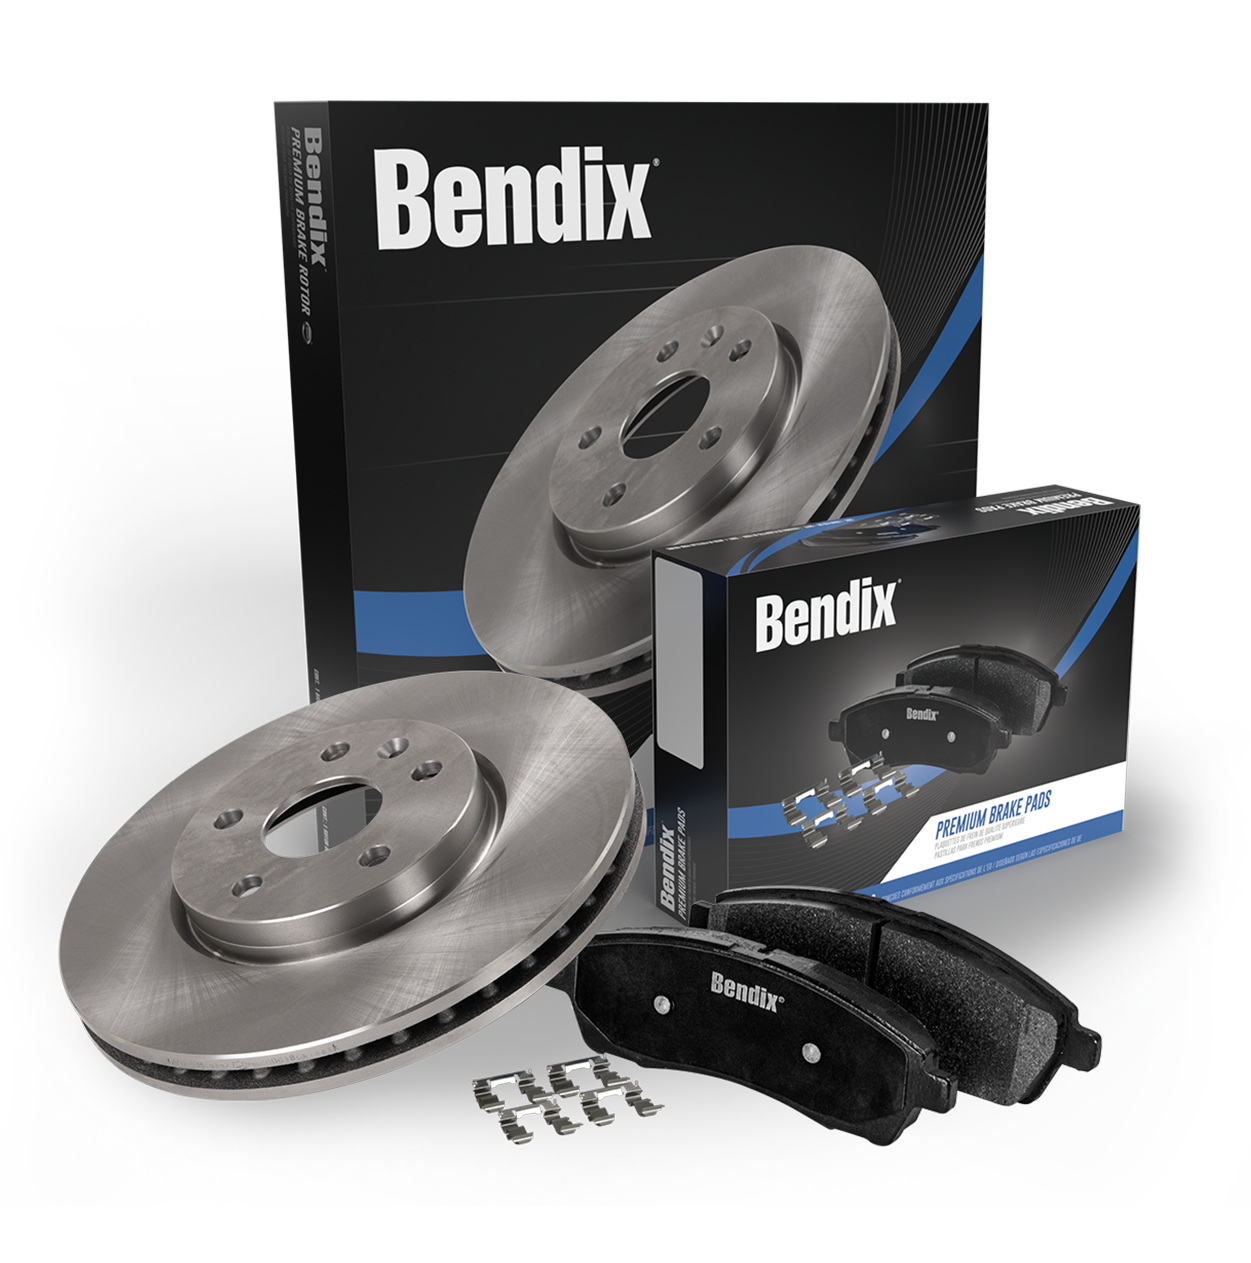 Bendix Premium Copper Free CFC1430SR Premium Copper Free Ceramic Brake Pad with Installation Hardware Rear 